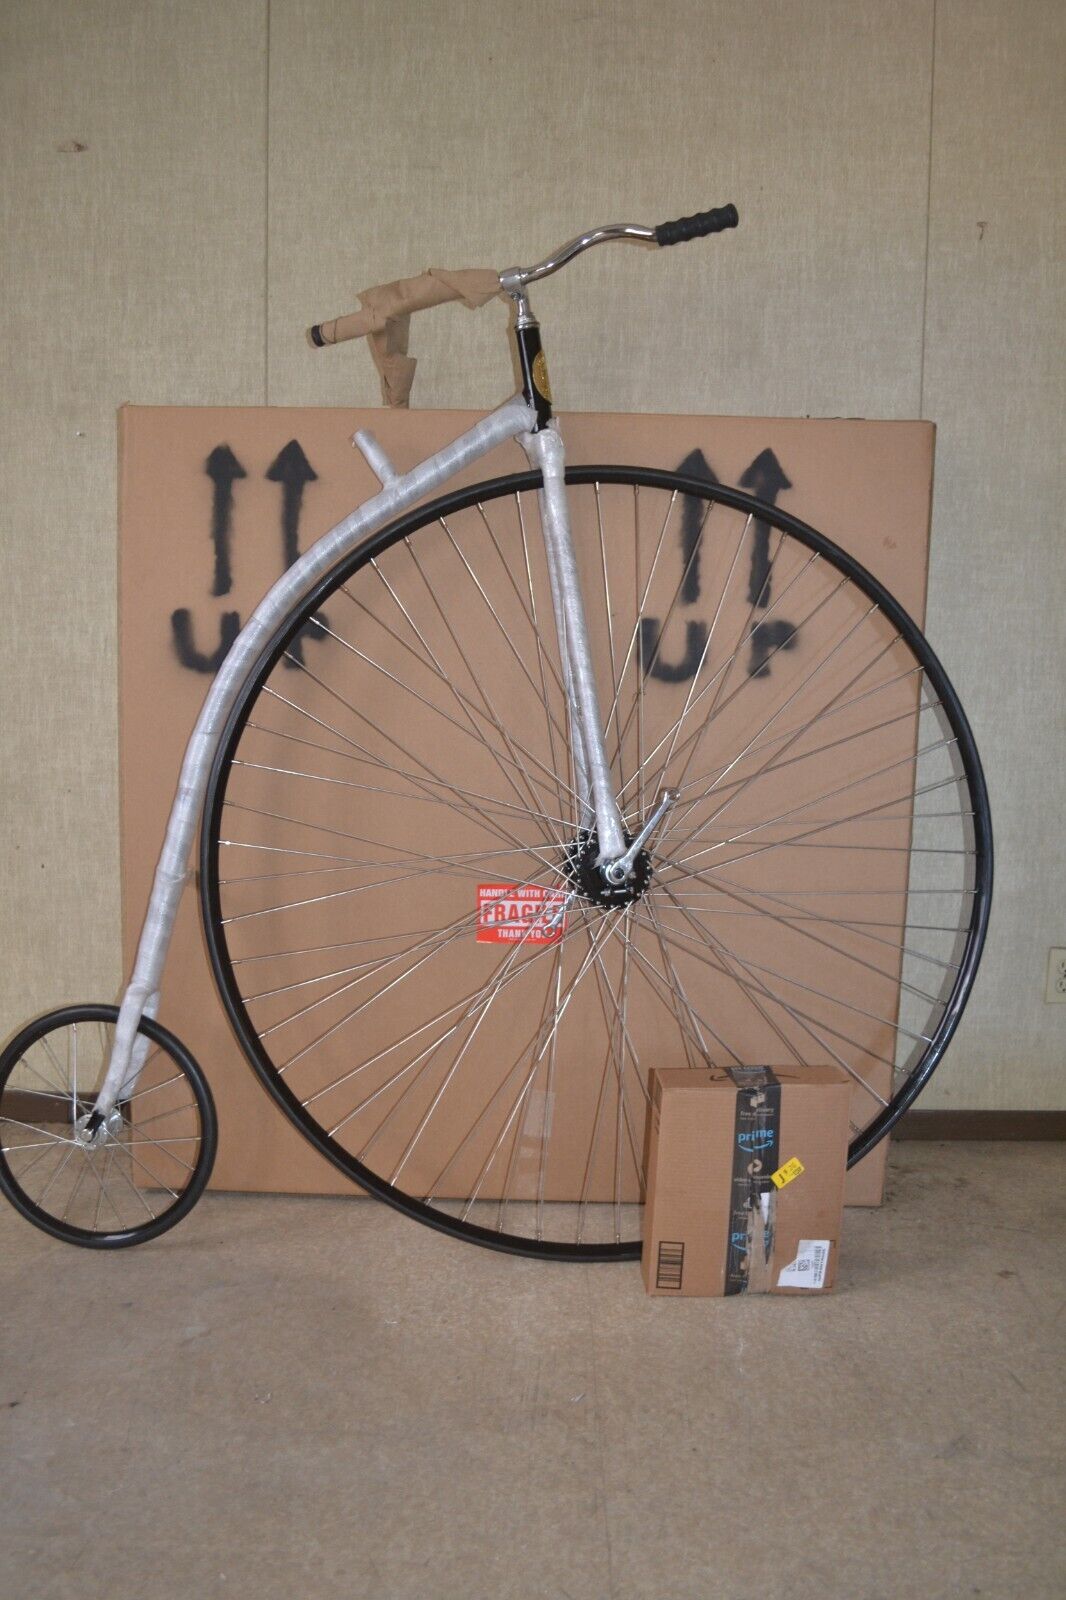 Replica Antique style high wheel bicycle, hiwheel, penny farthing, boneshaker